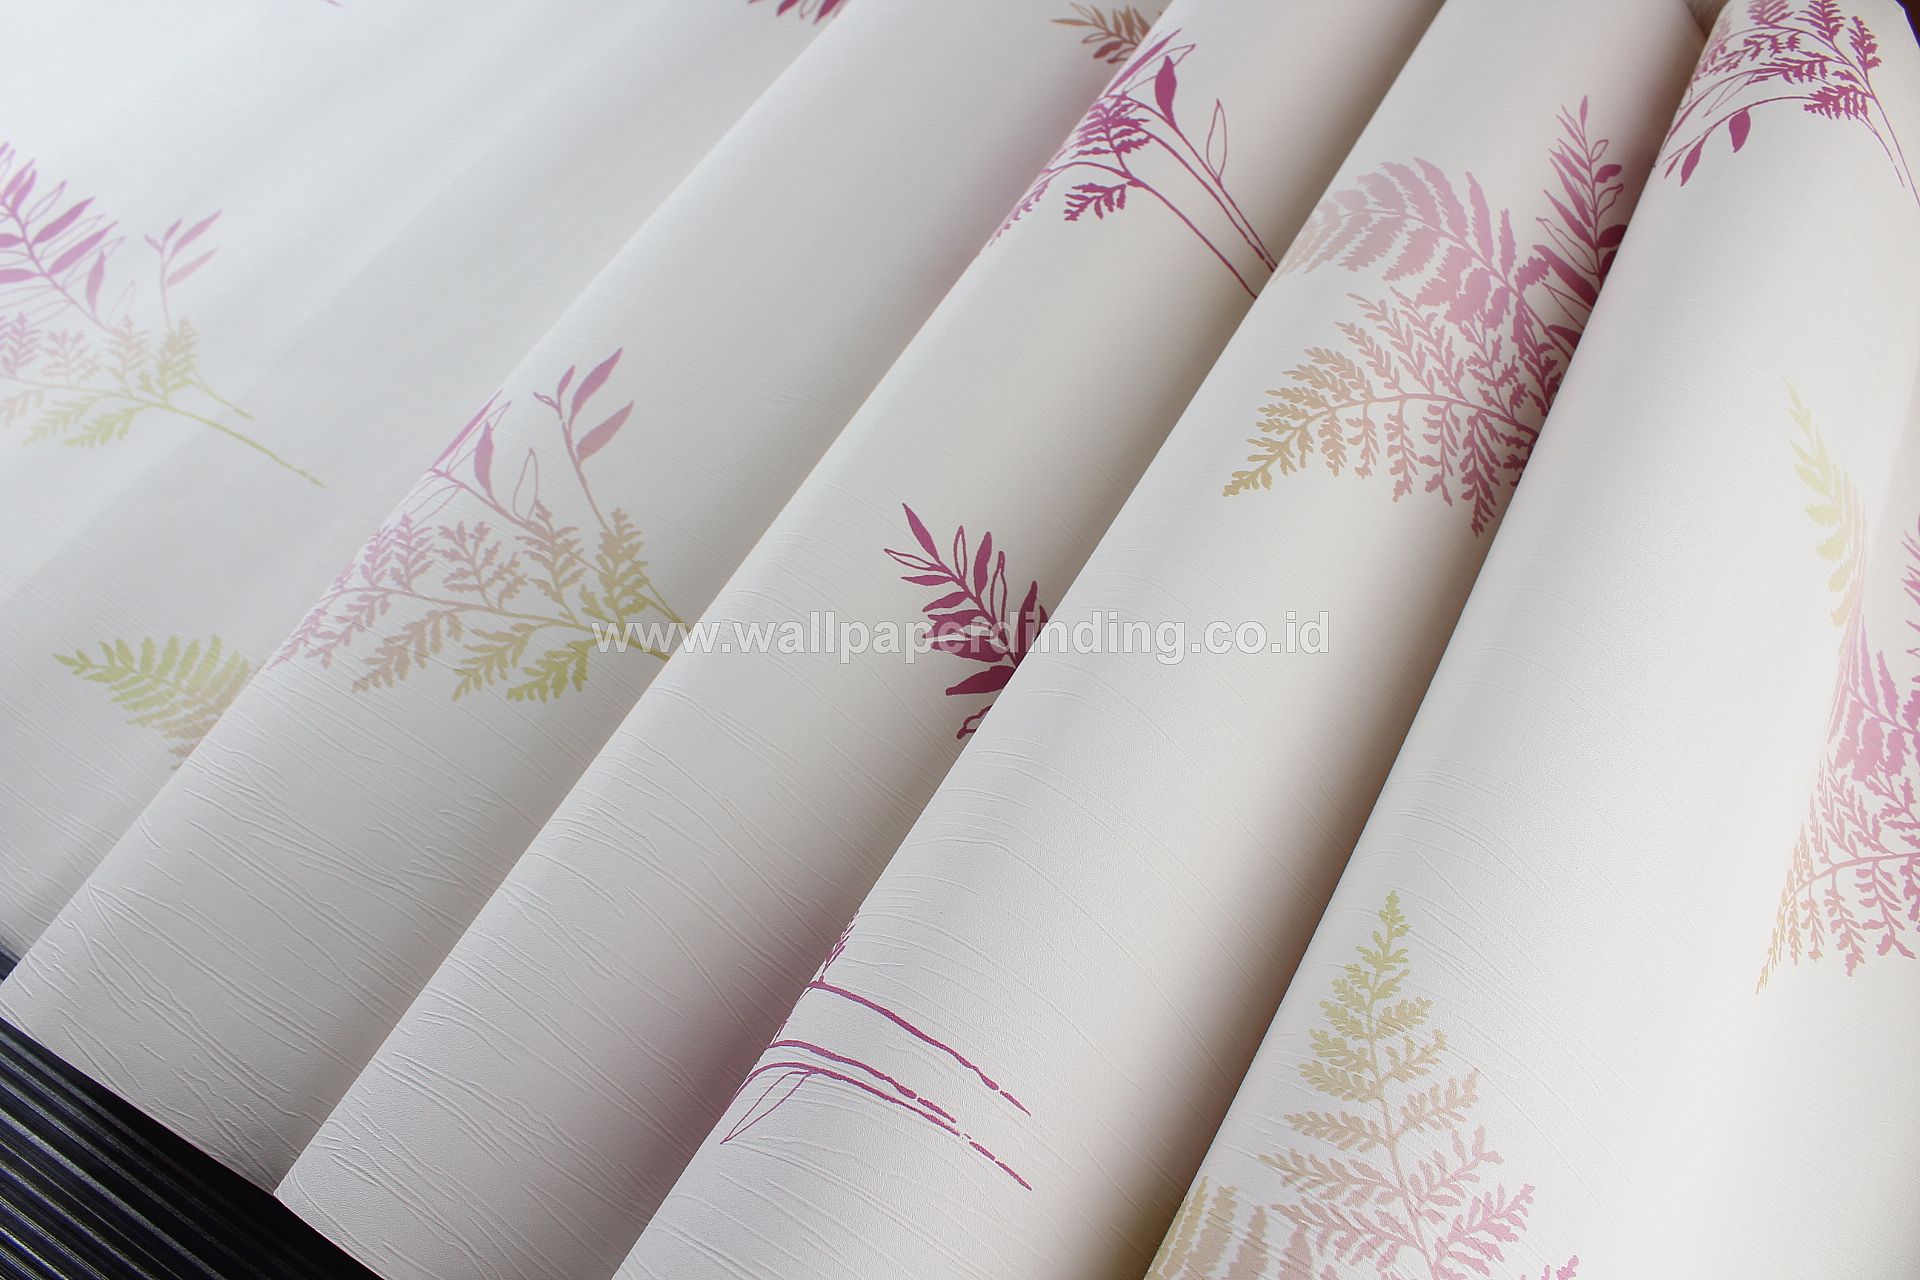 Wallpaper Dinding Daun Ungu D-bl0104 - Sentuhan Walpaper Bungà Warna Merah Muda Soft - HD Wallpaper 